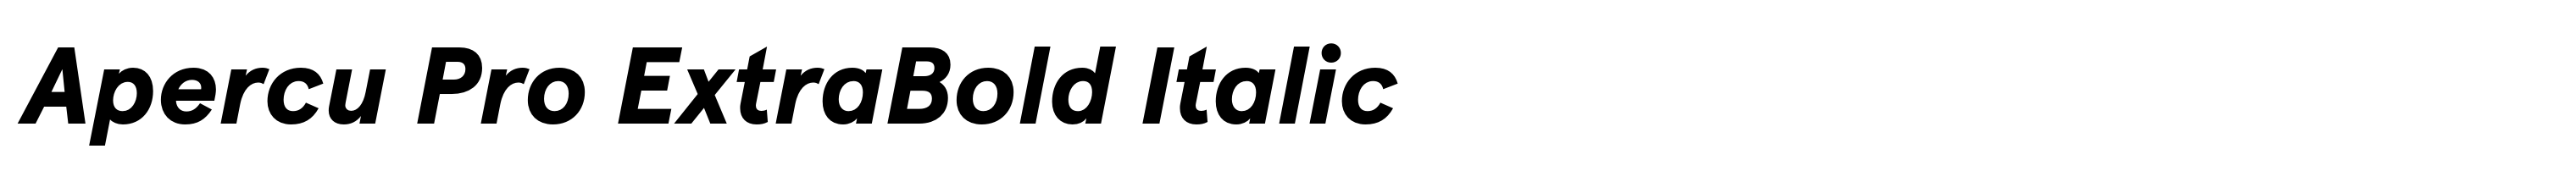 Apercu Pro ExtraBold Italic